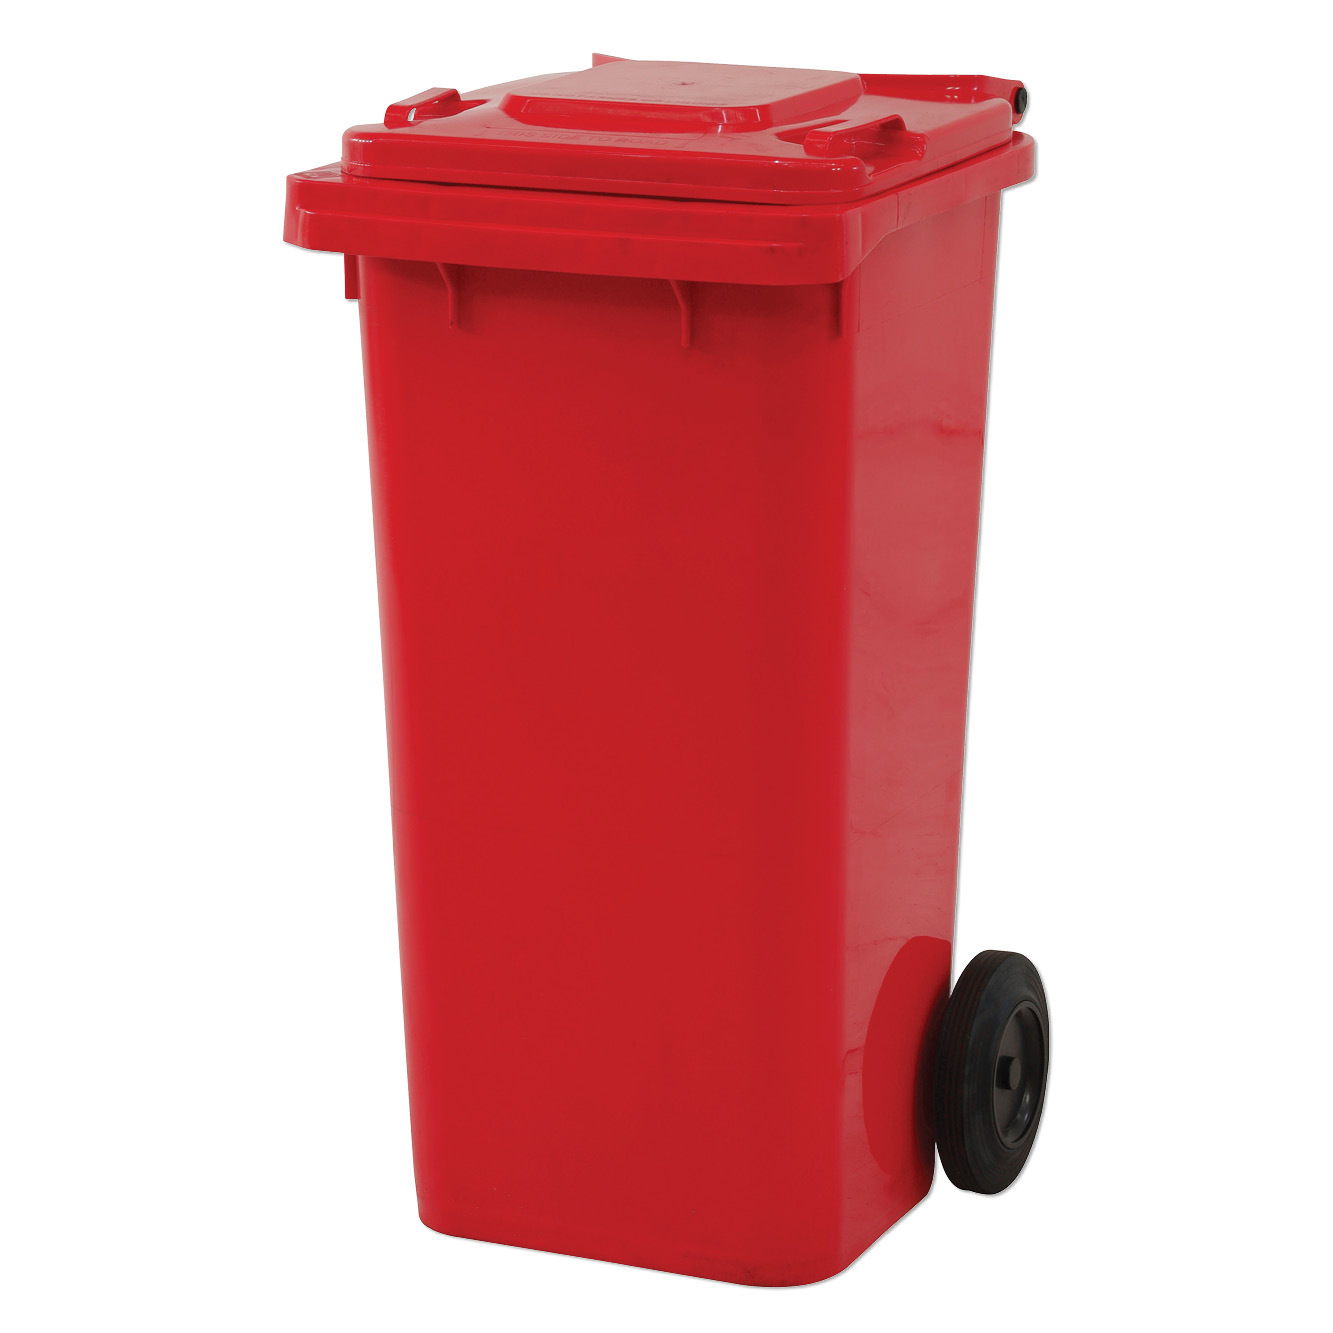 Plastic Wheelie Bin 120 Litre- Red (480x550x940mm - WxDxH)